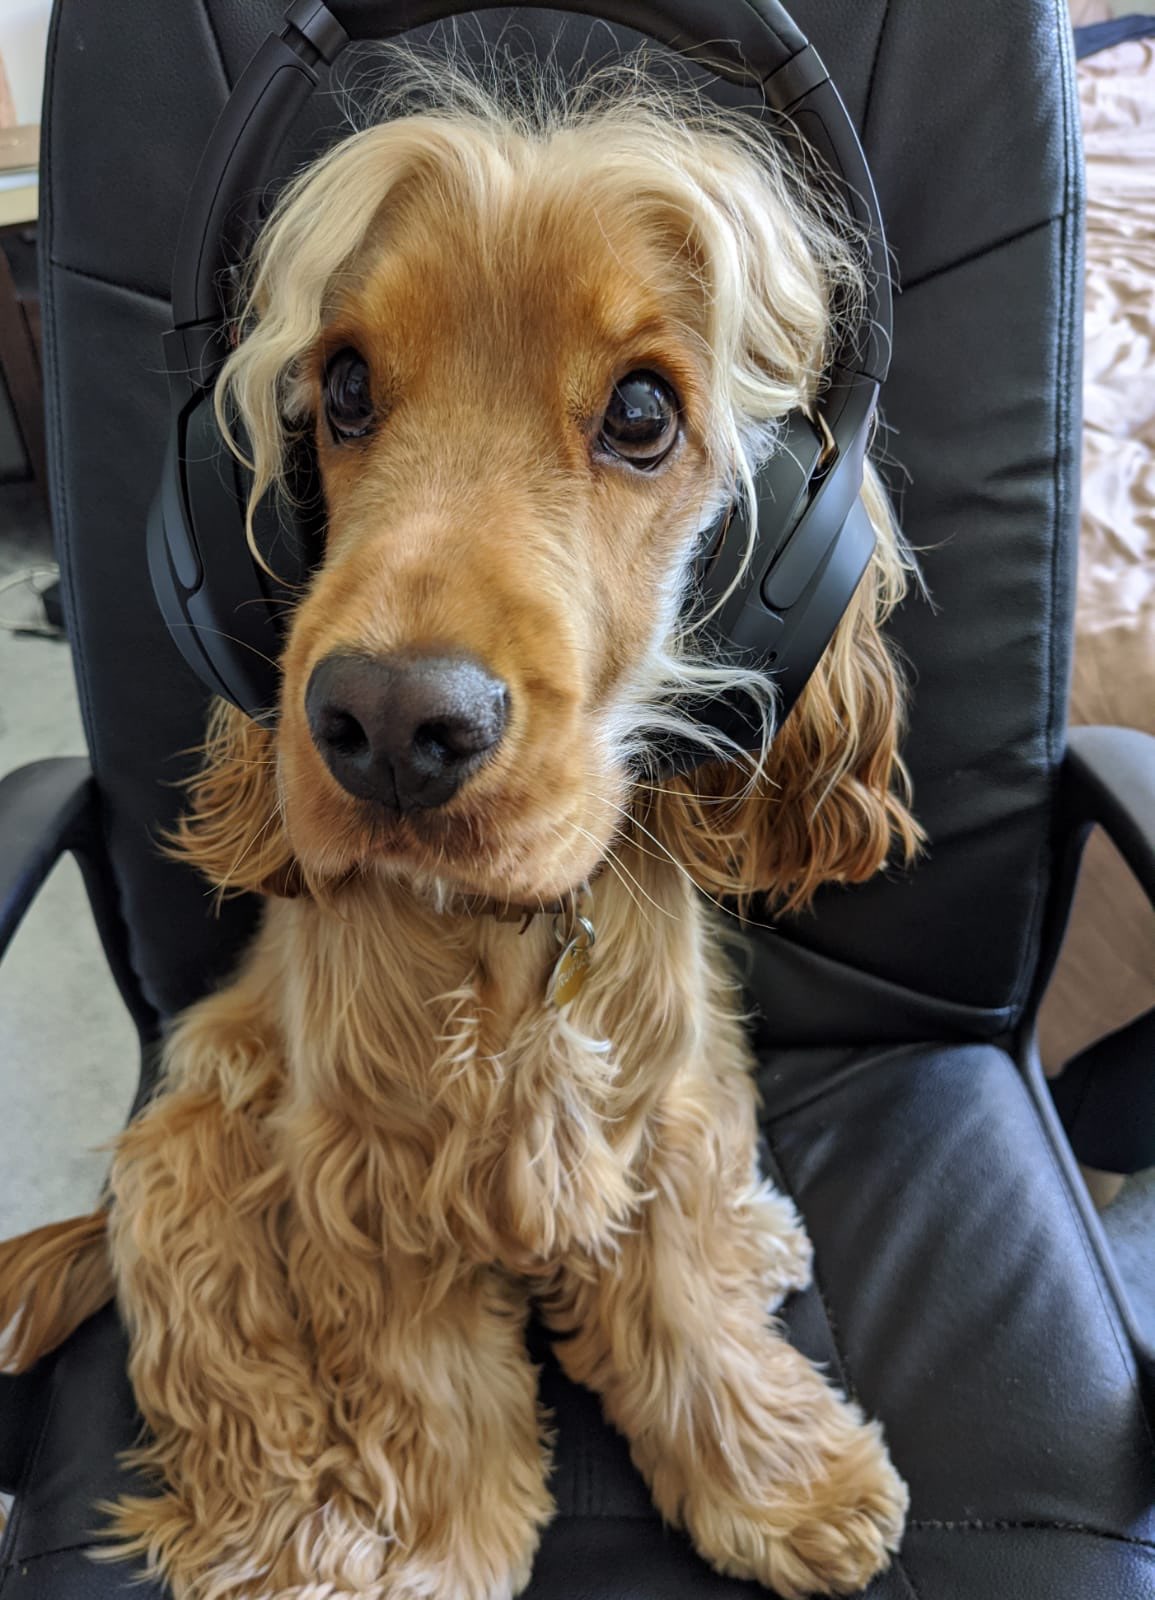 Dog sitting on chair wearing headphones